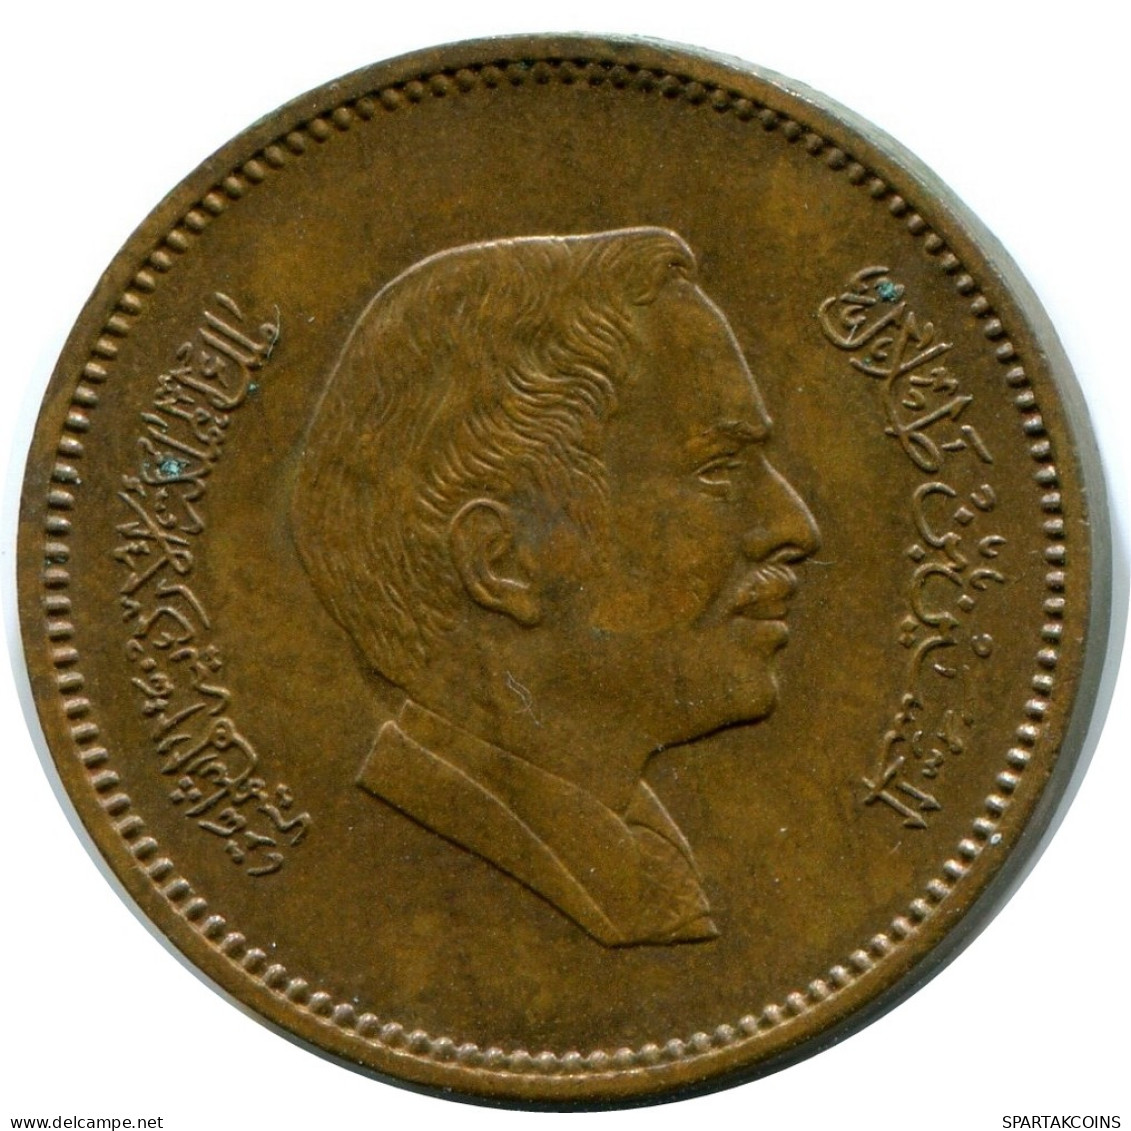 1/2 QIRSH 5 FILS 1978 JORDAN Islamic Coin #AW798.U - Jordania